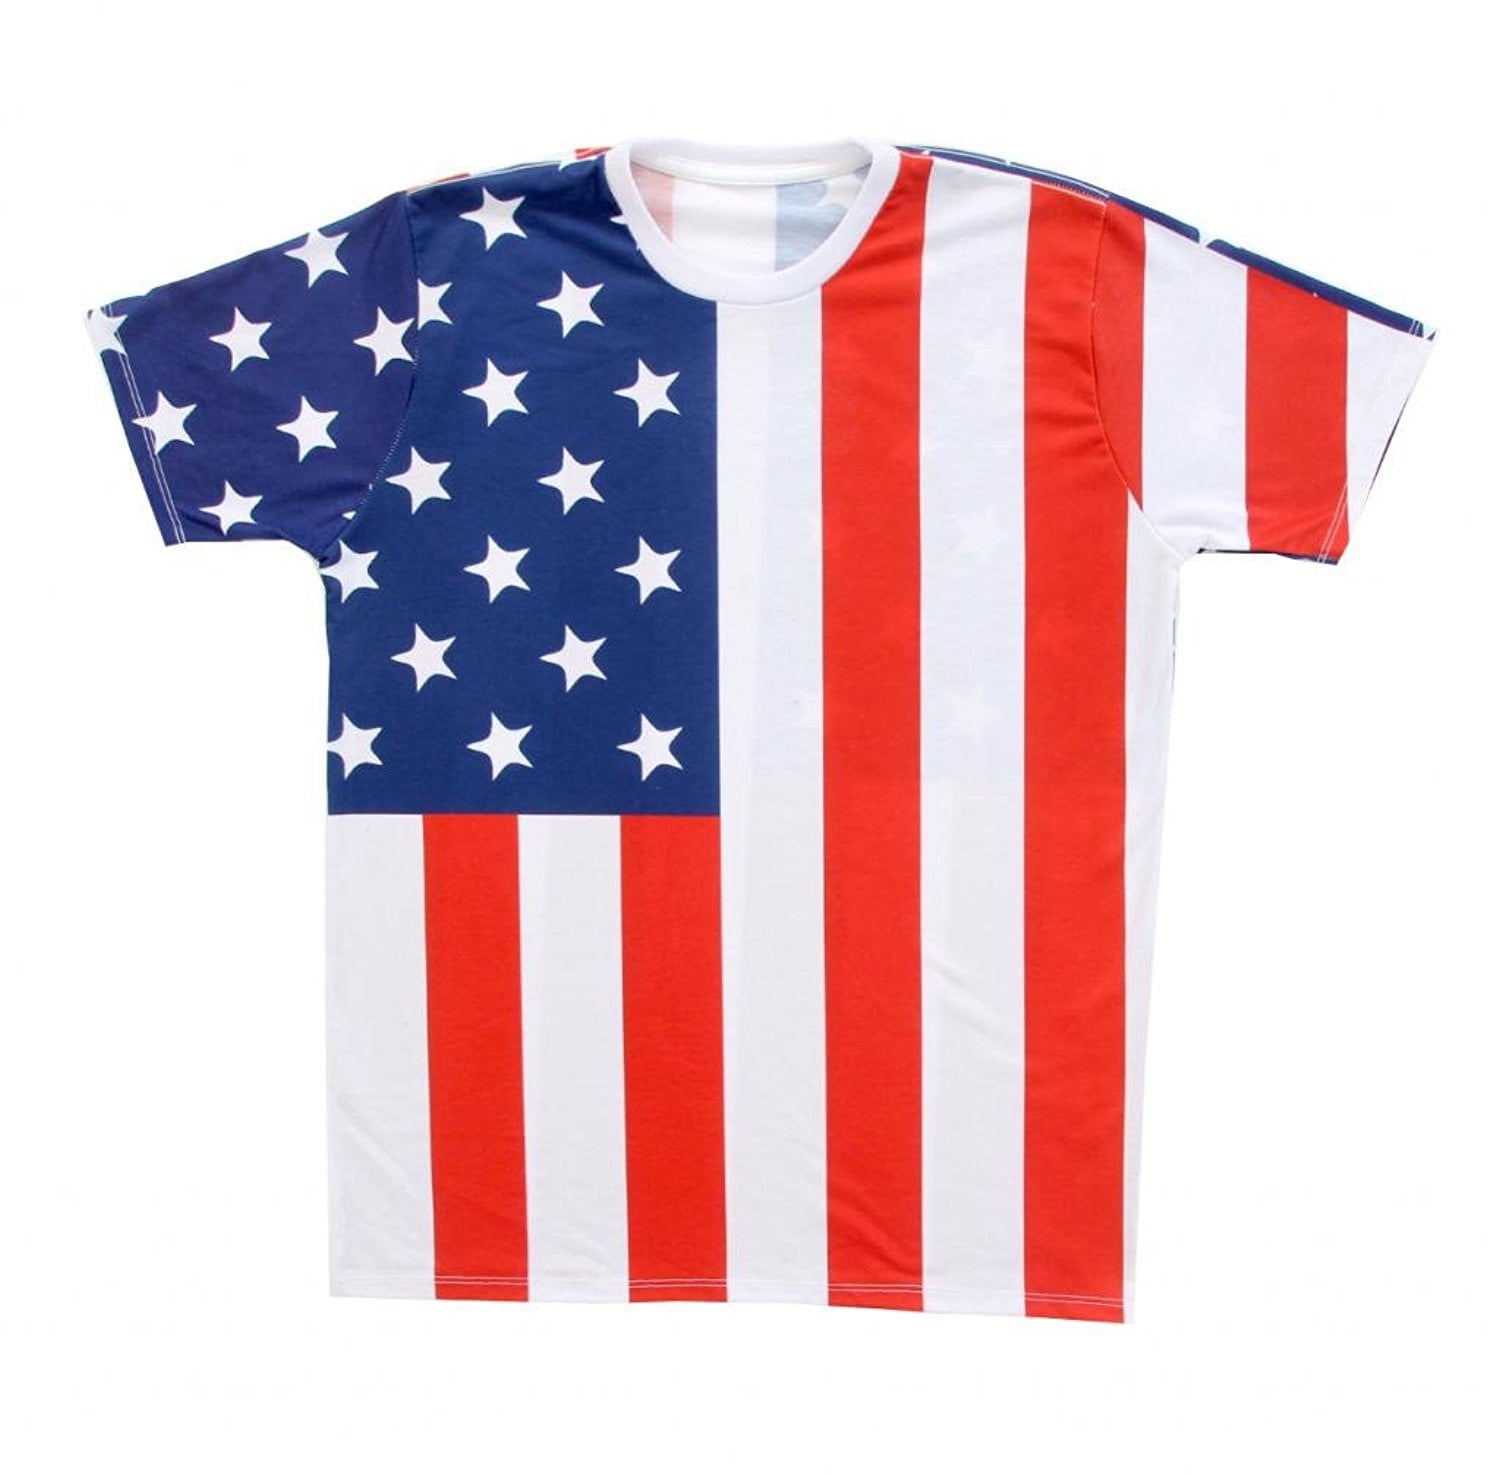 USA American Flag Sublimation Adult T-Shirt - Walmart.com